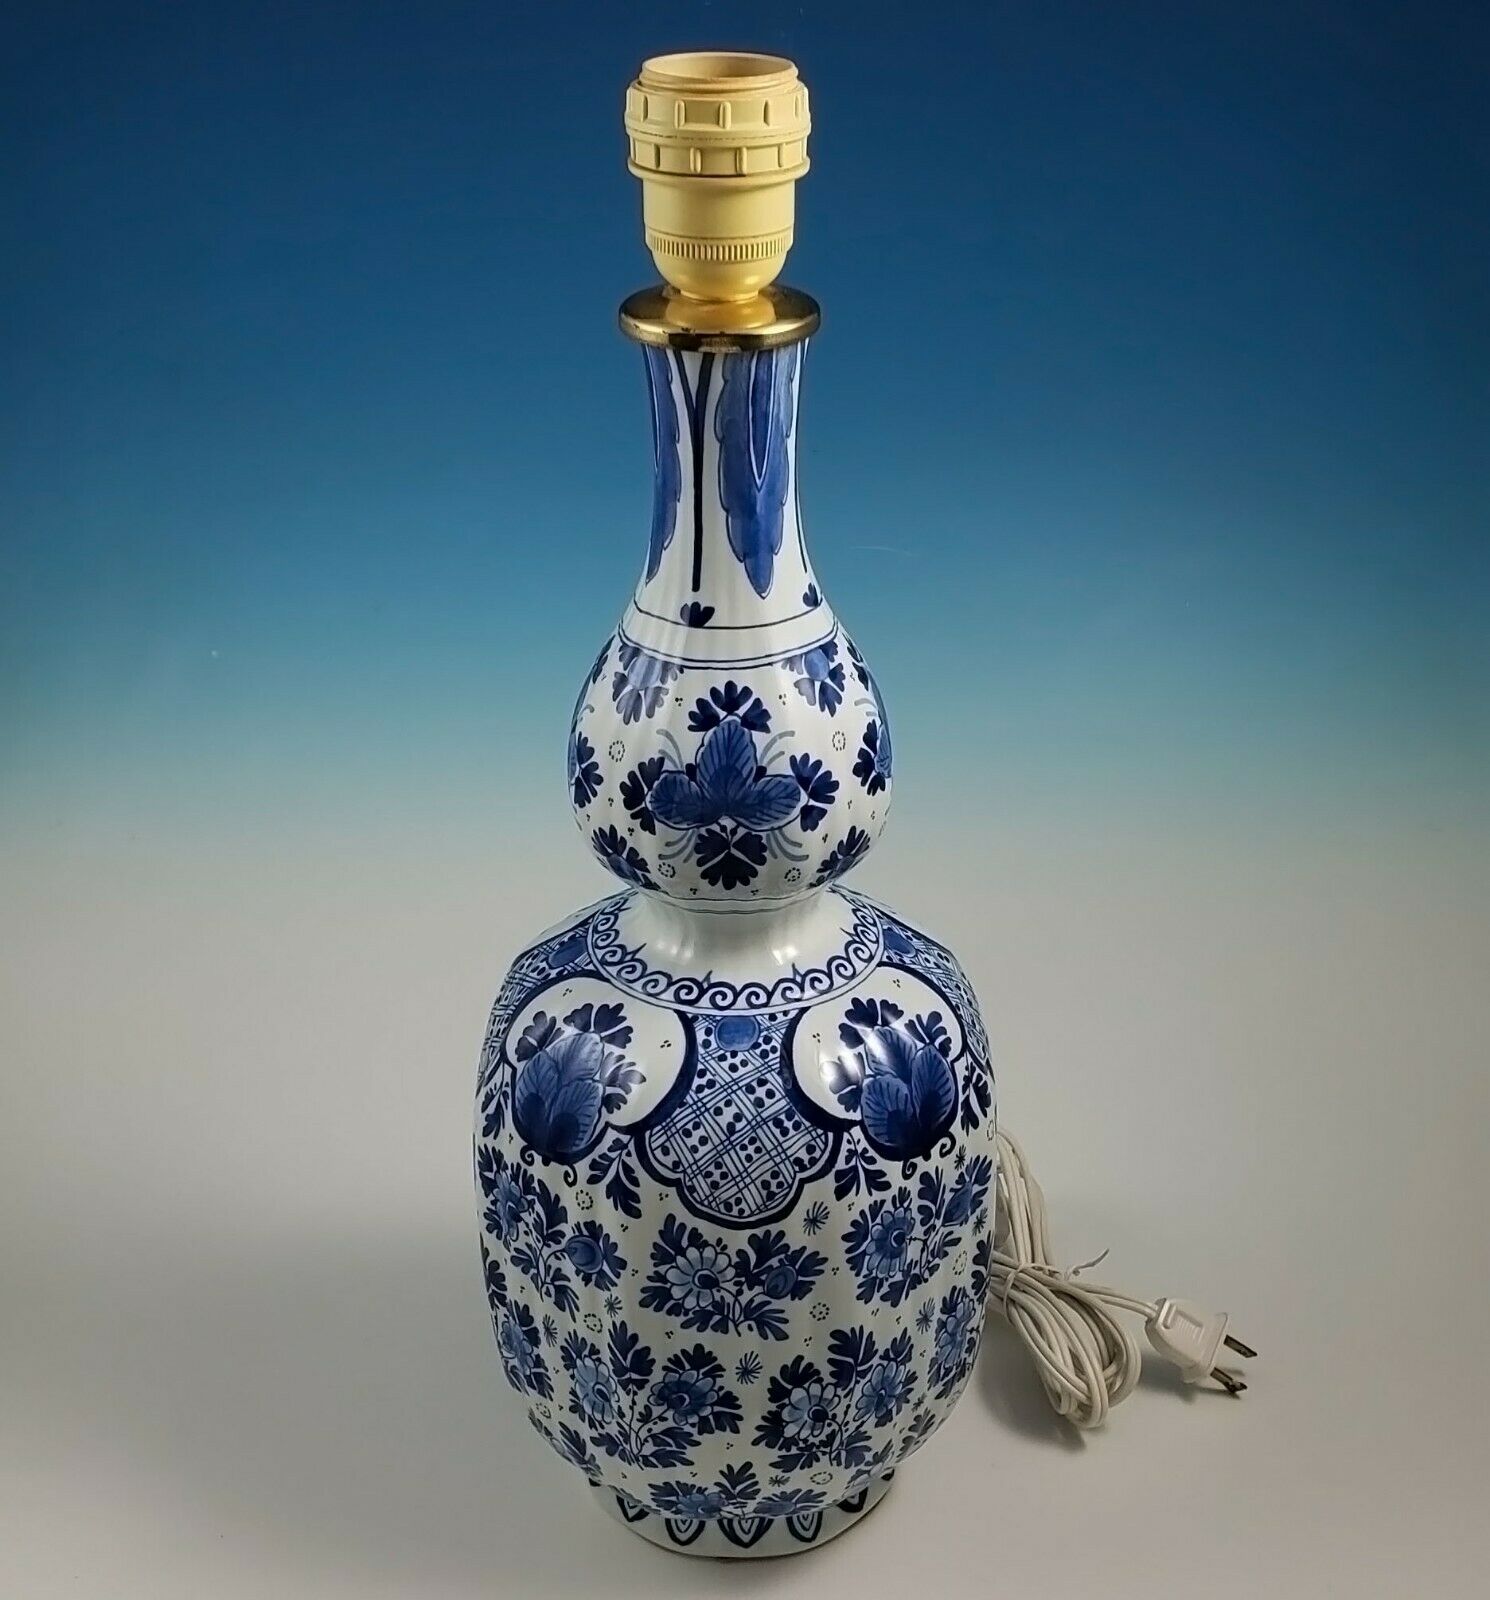 Vintage Royal Delft Fles Blue White Double Gourd Vase Lamp 17th Century Style